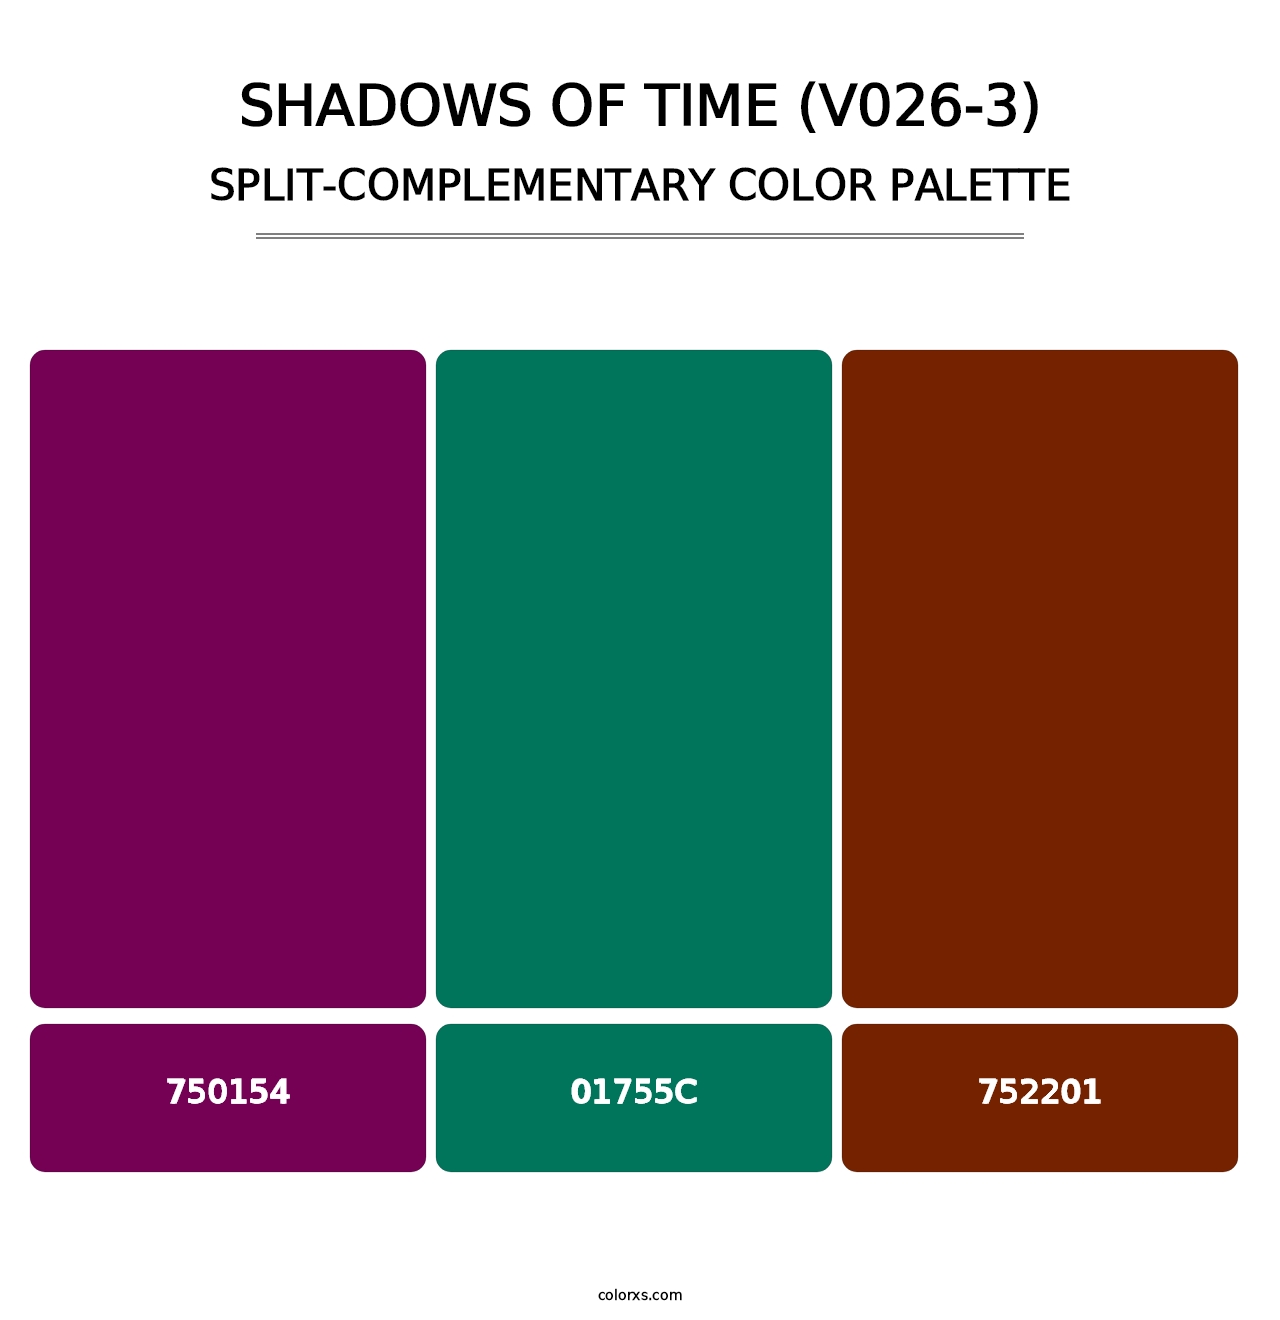 Shadows of Time (V026-3) - Split-Complementary Color Palette